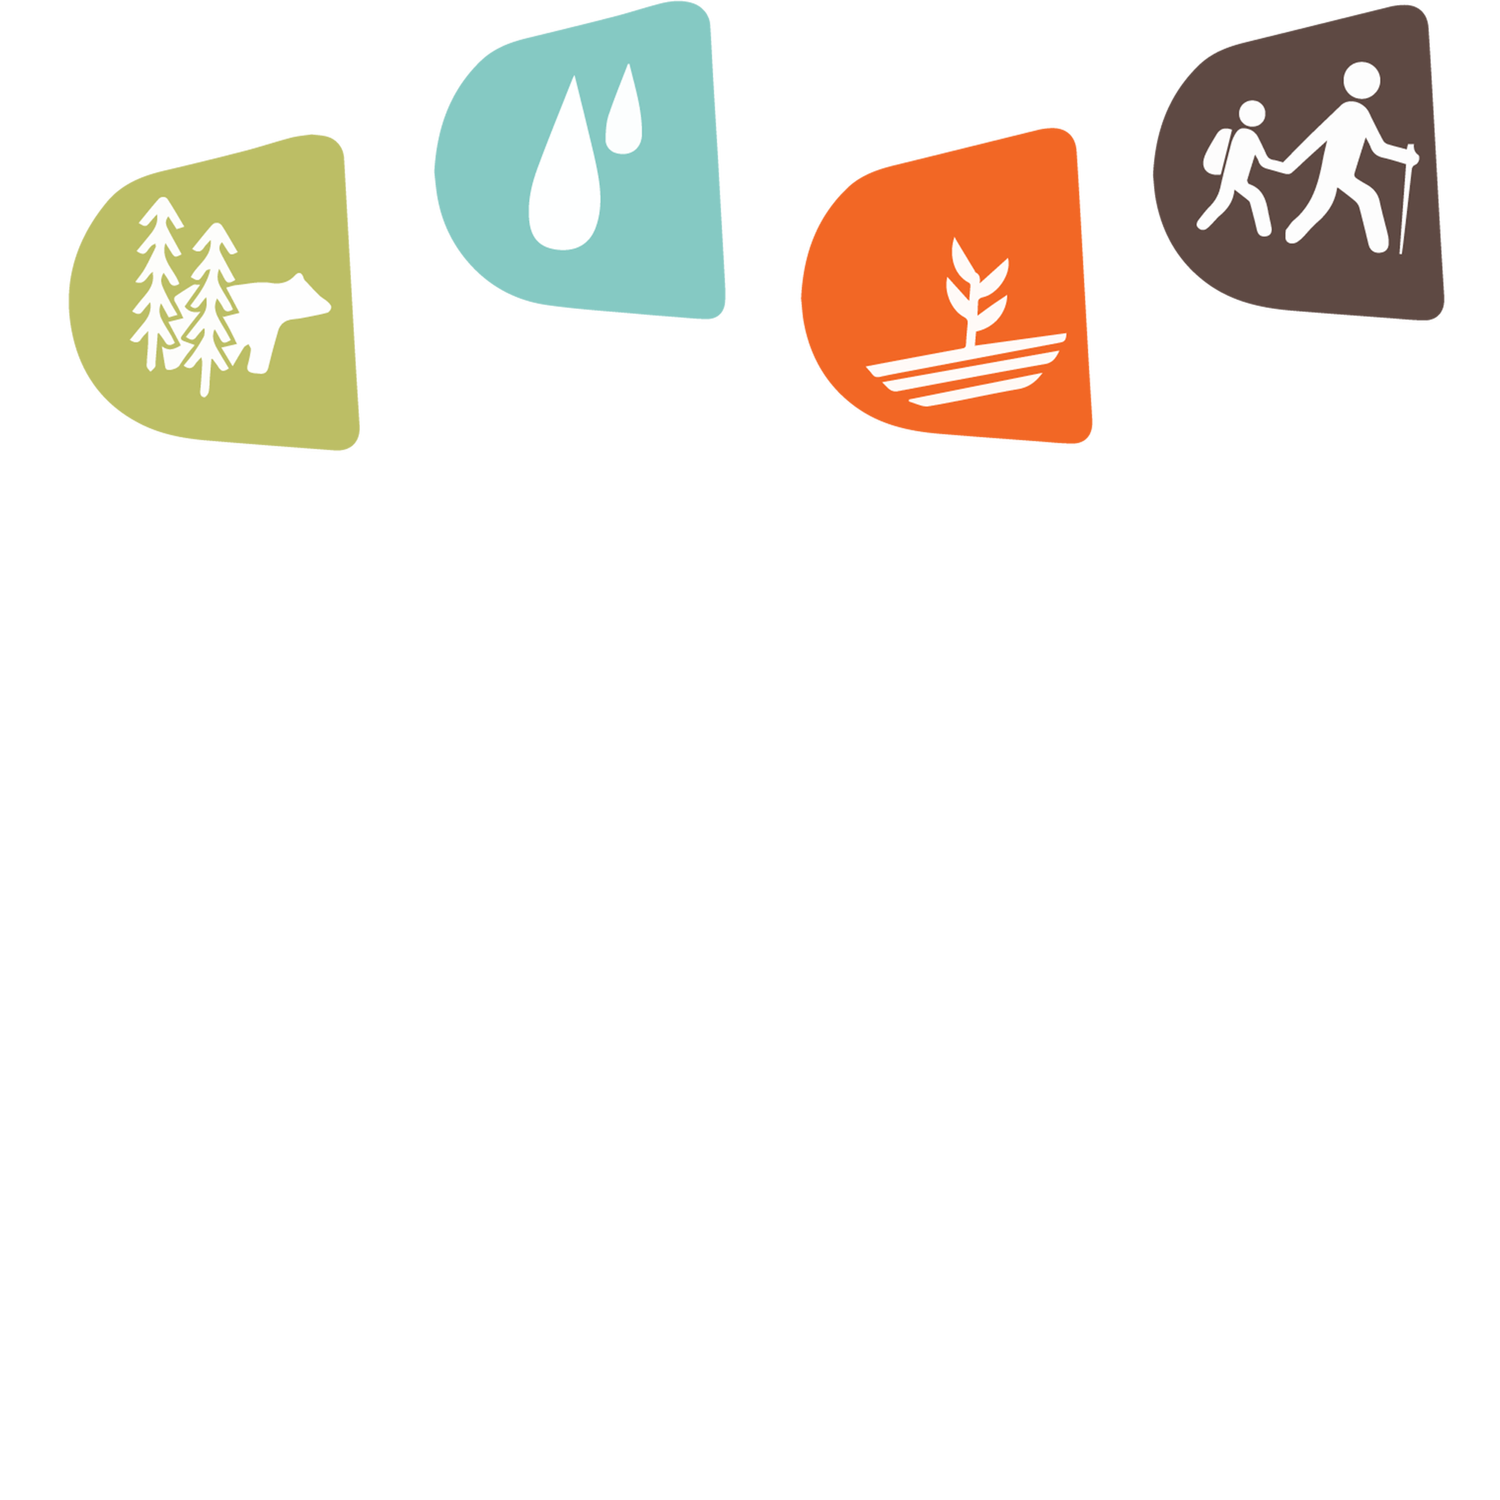 Ammonoosuc Conservation Trust